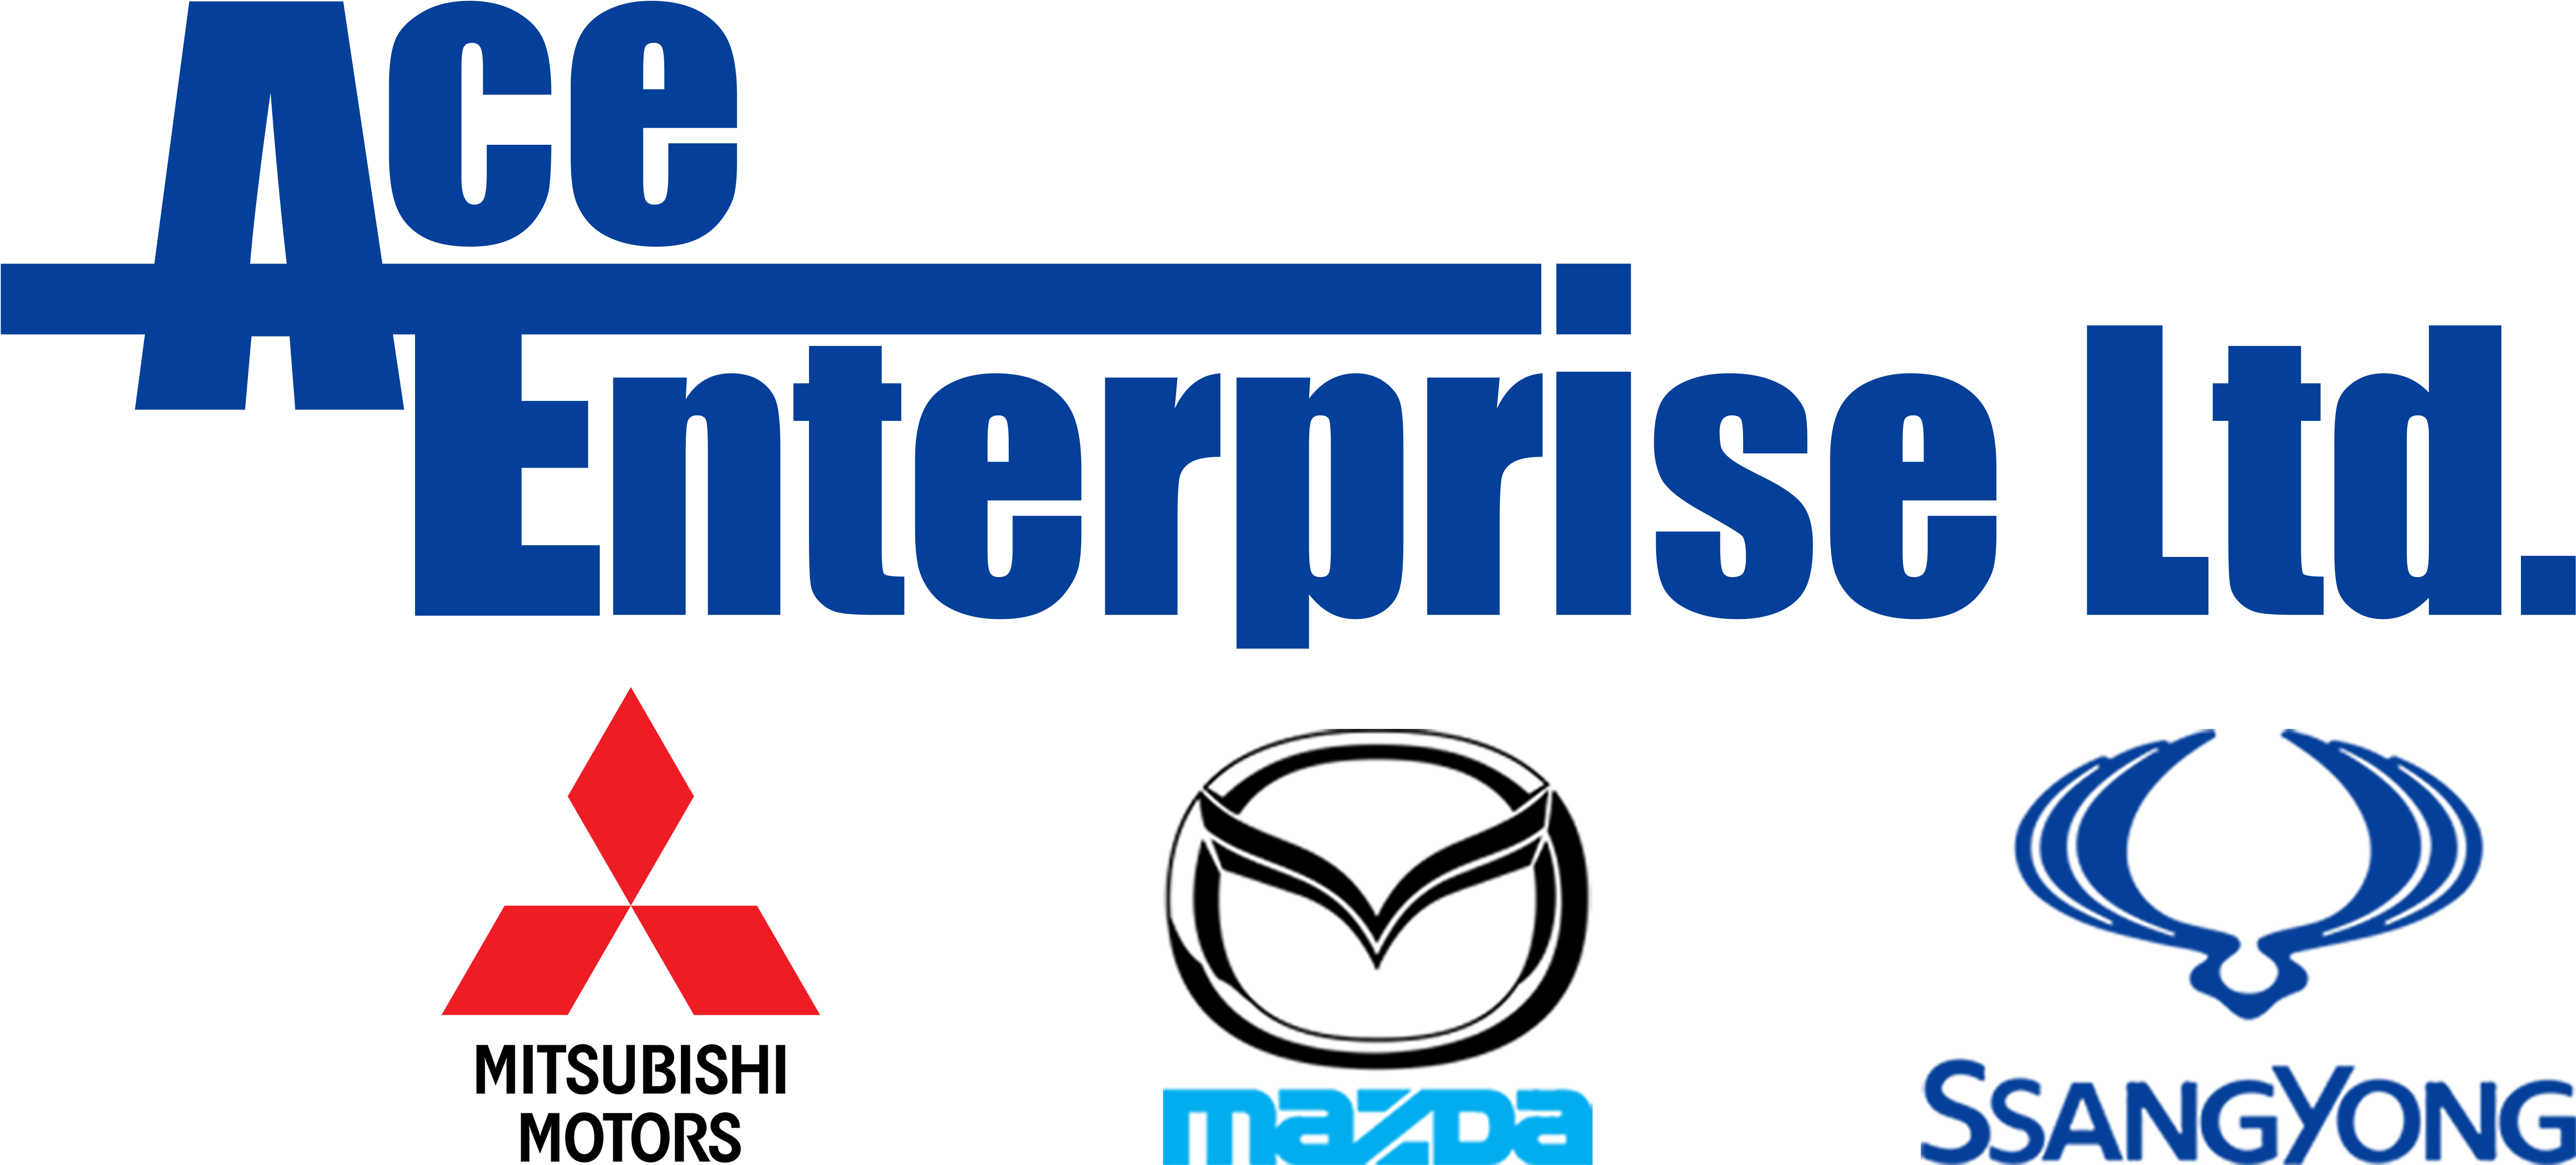 Ace Enterprise Logo - Ssangyong (6000x3000), Png Download